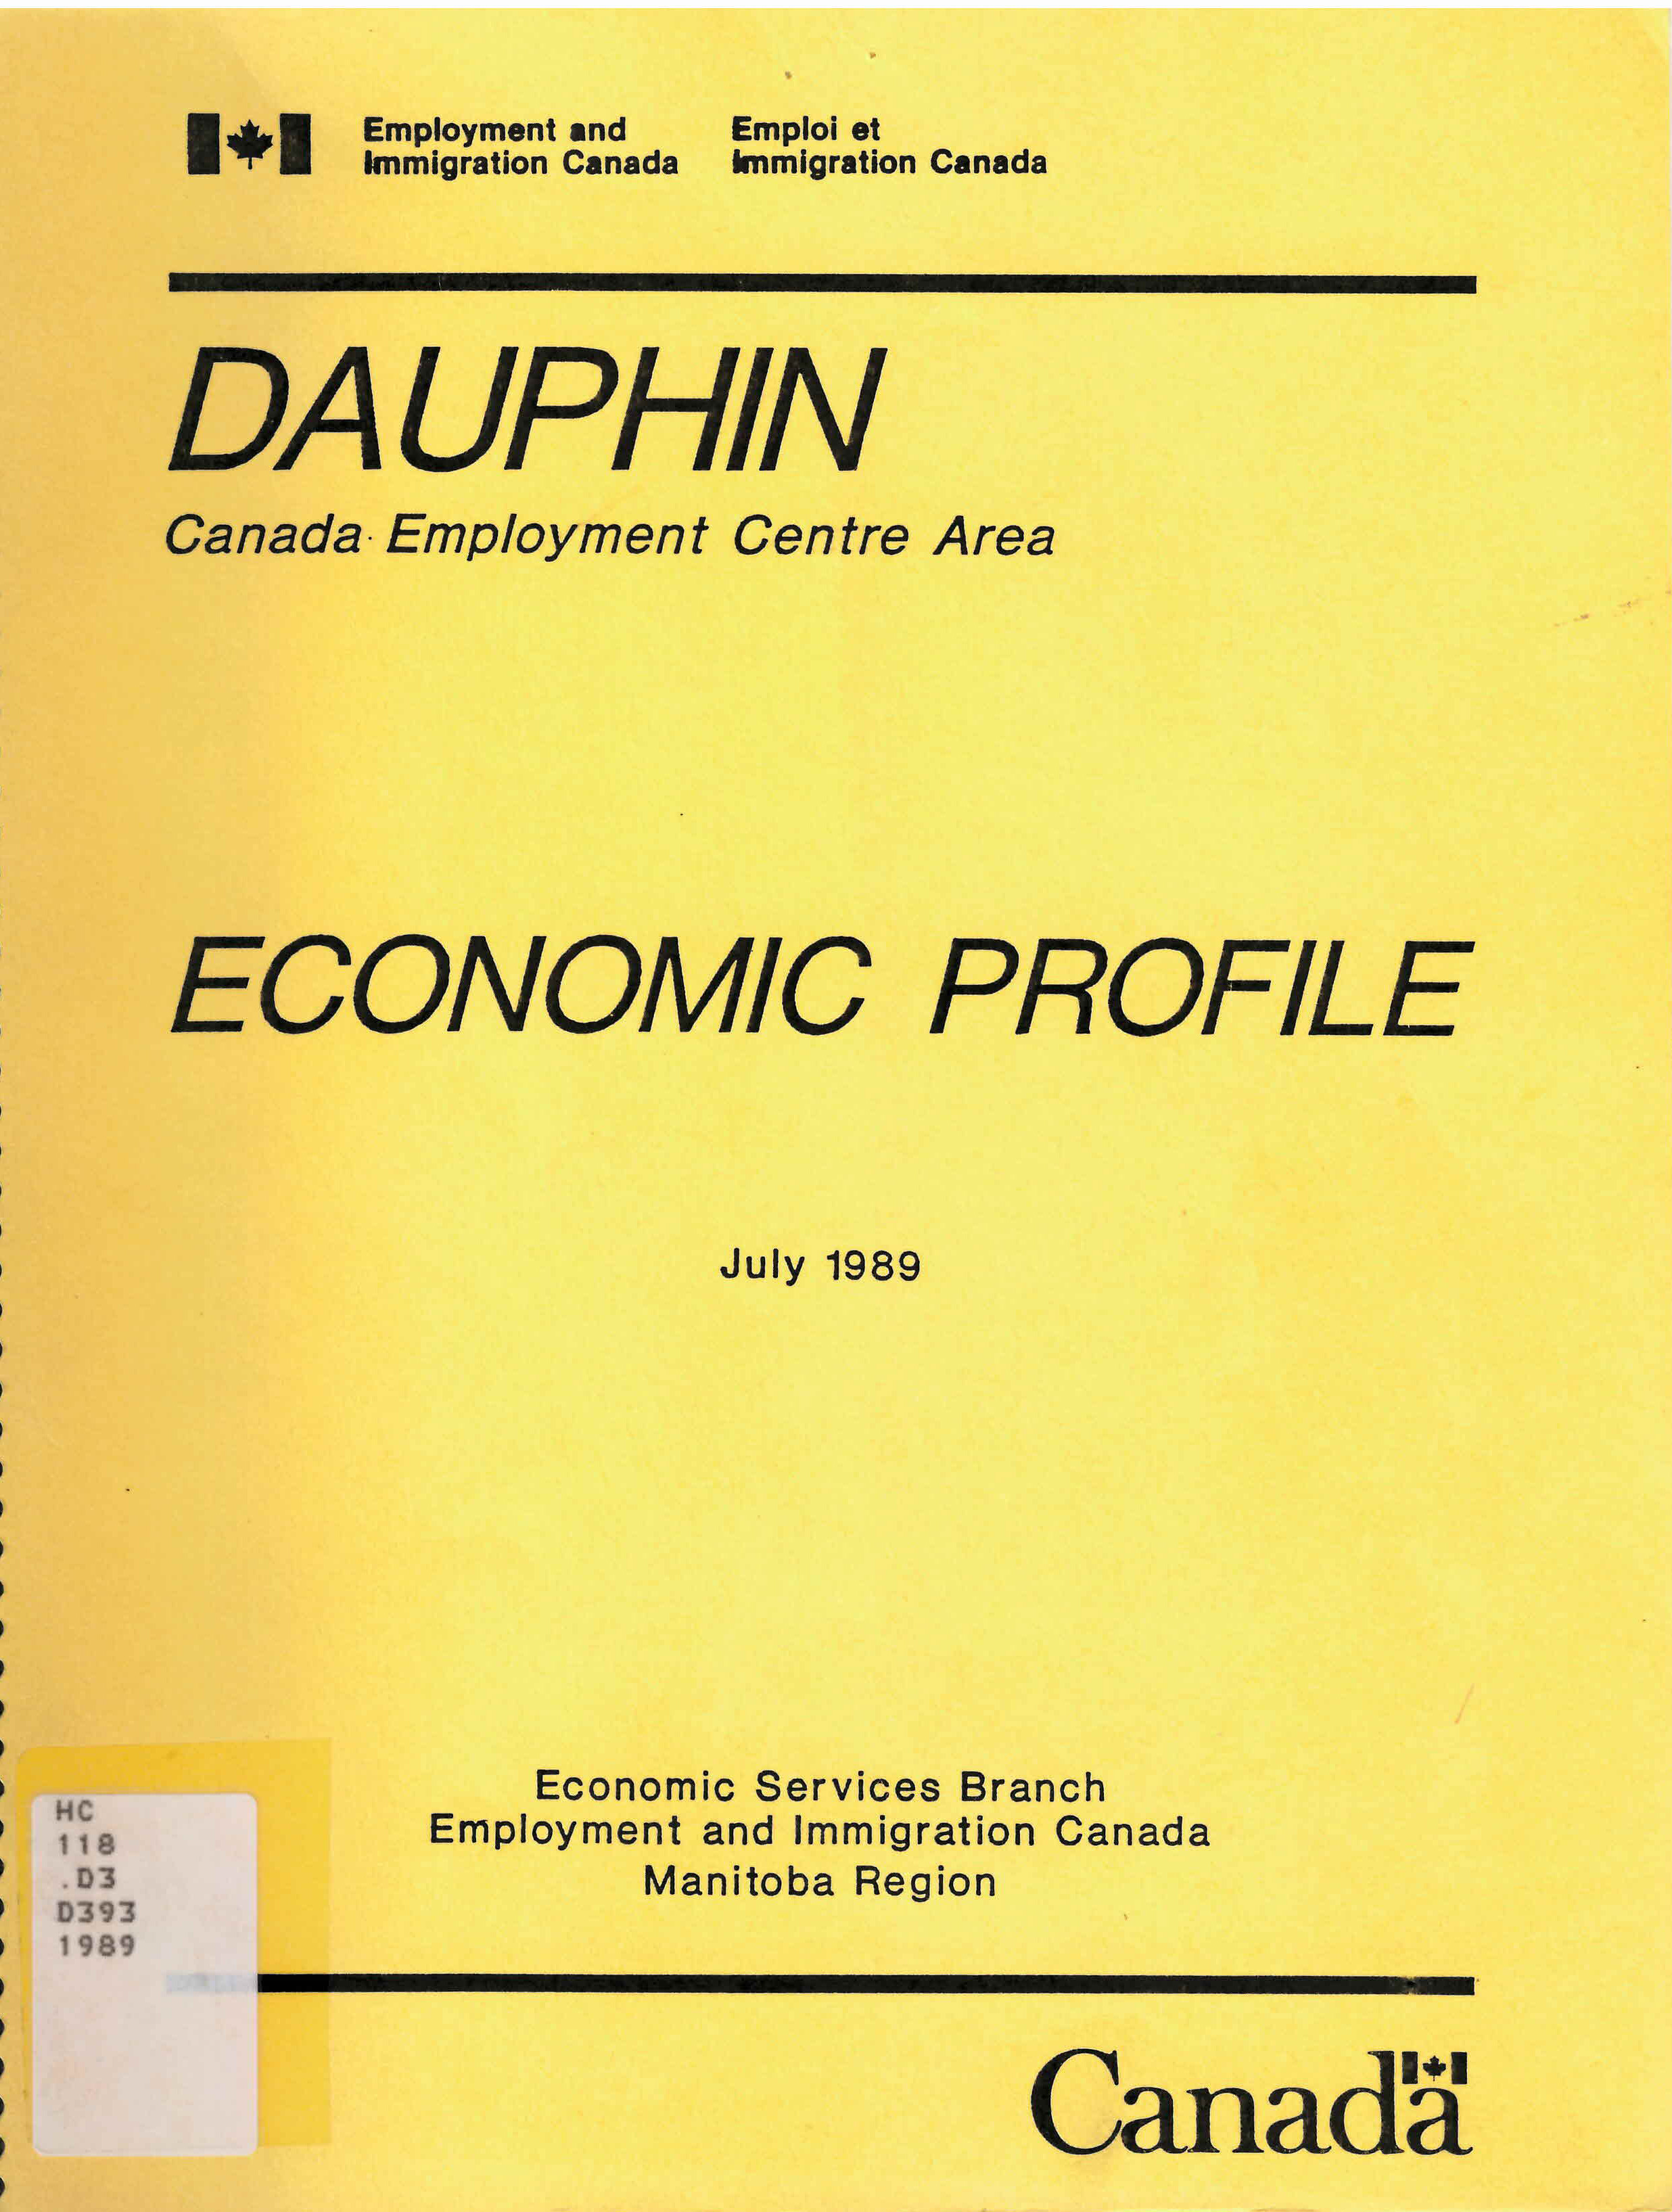 Dauphin Canada Employment Centre Area economic profile